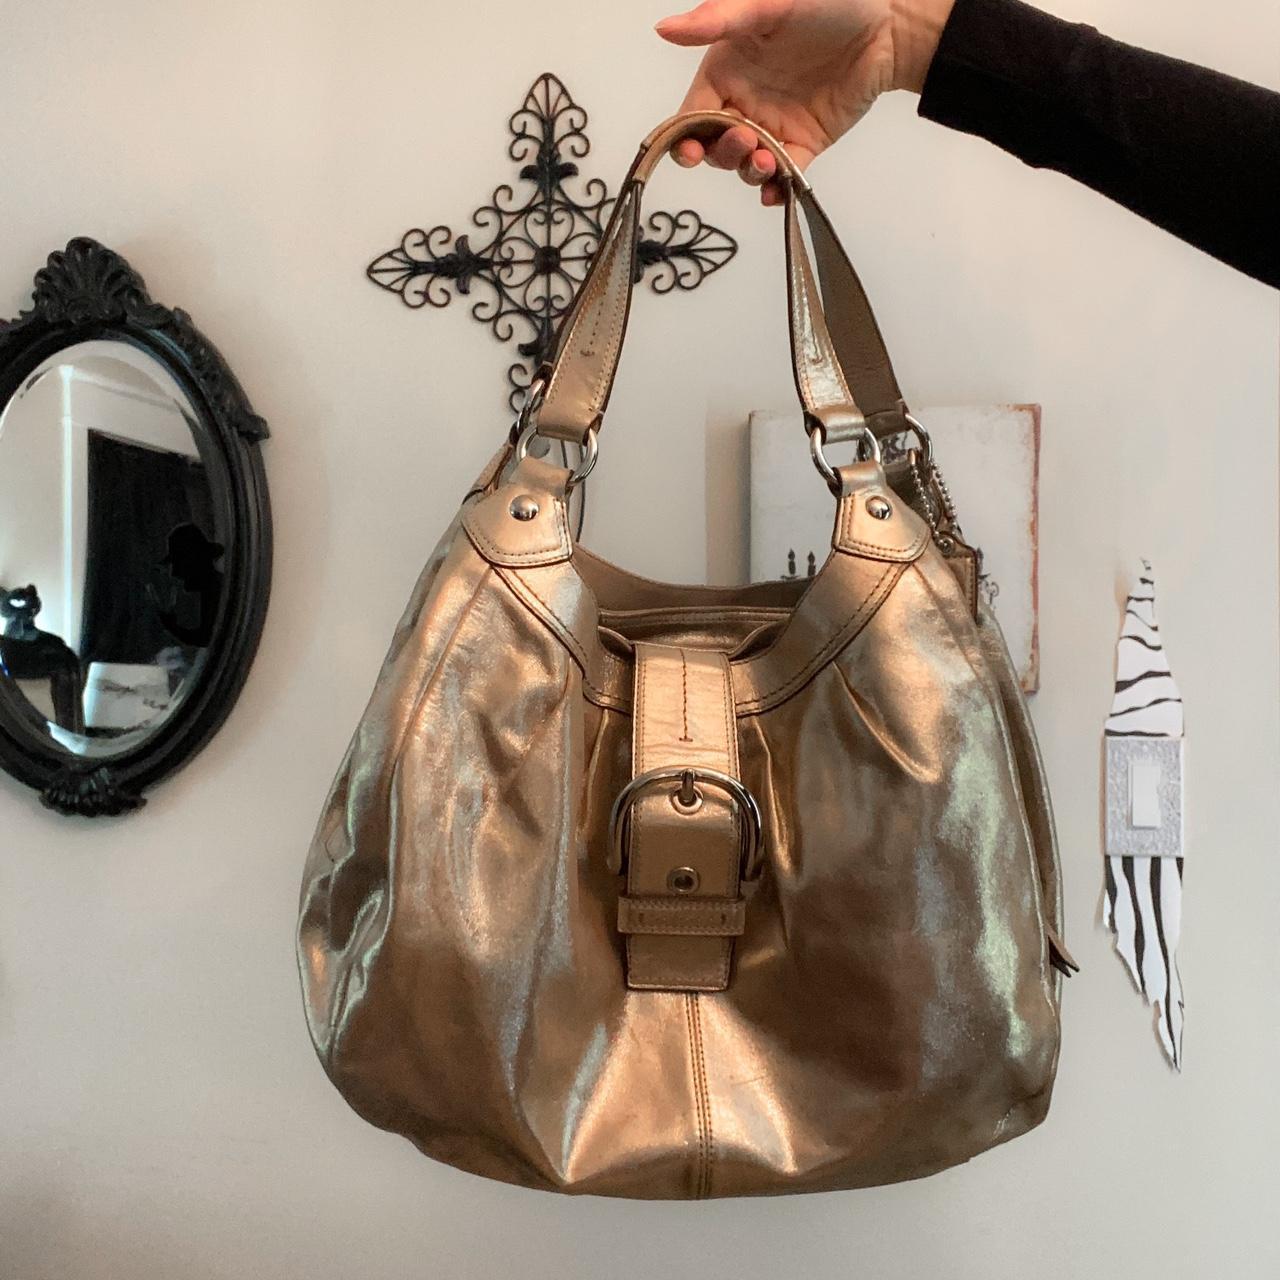 New brand purse - Women - 1735497860